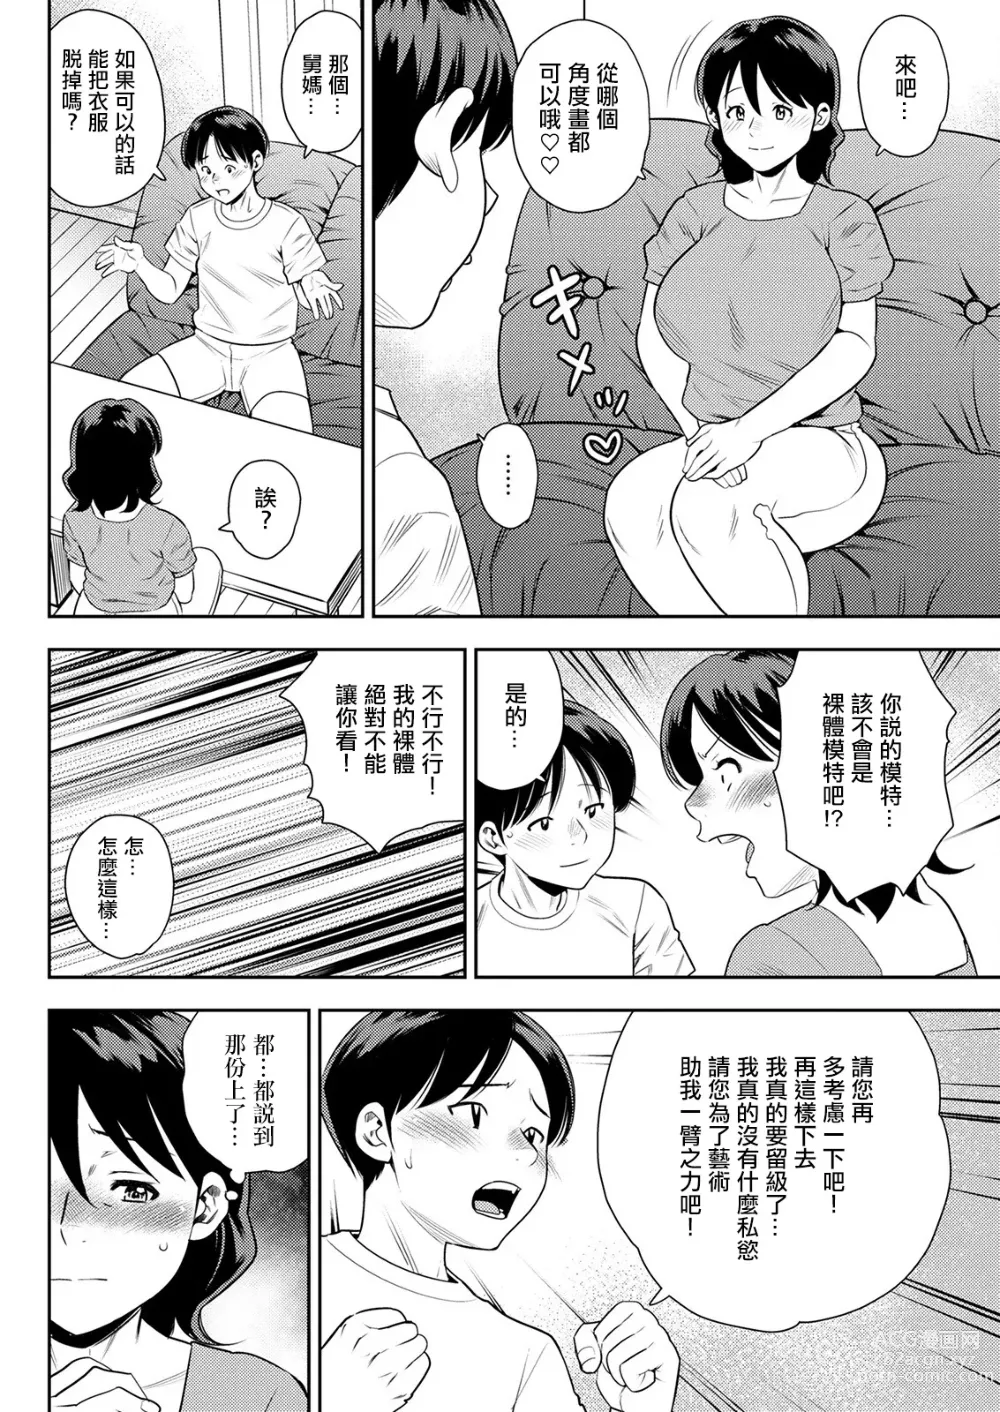 Page 4 of manga Iiwake